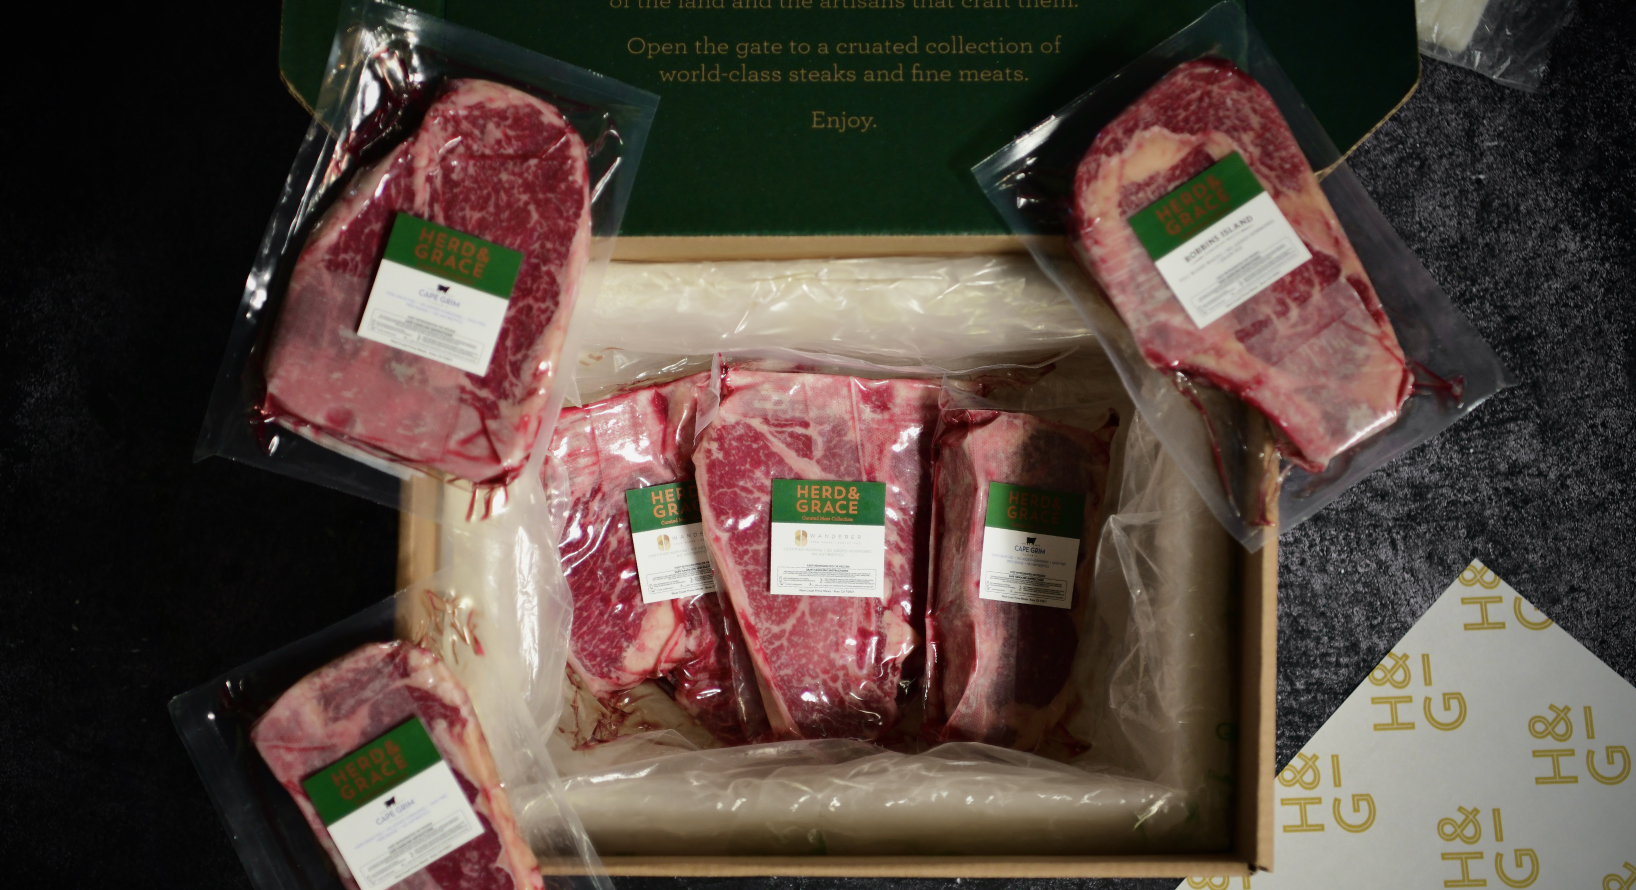 Herd & Grace Branded Meat Box showcasing branded packaging